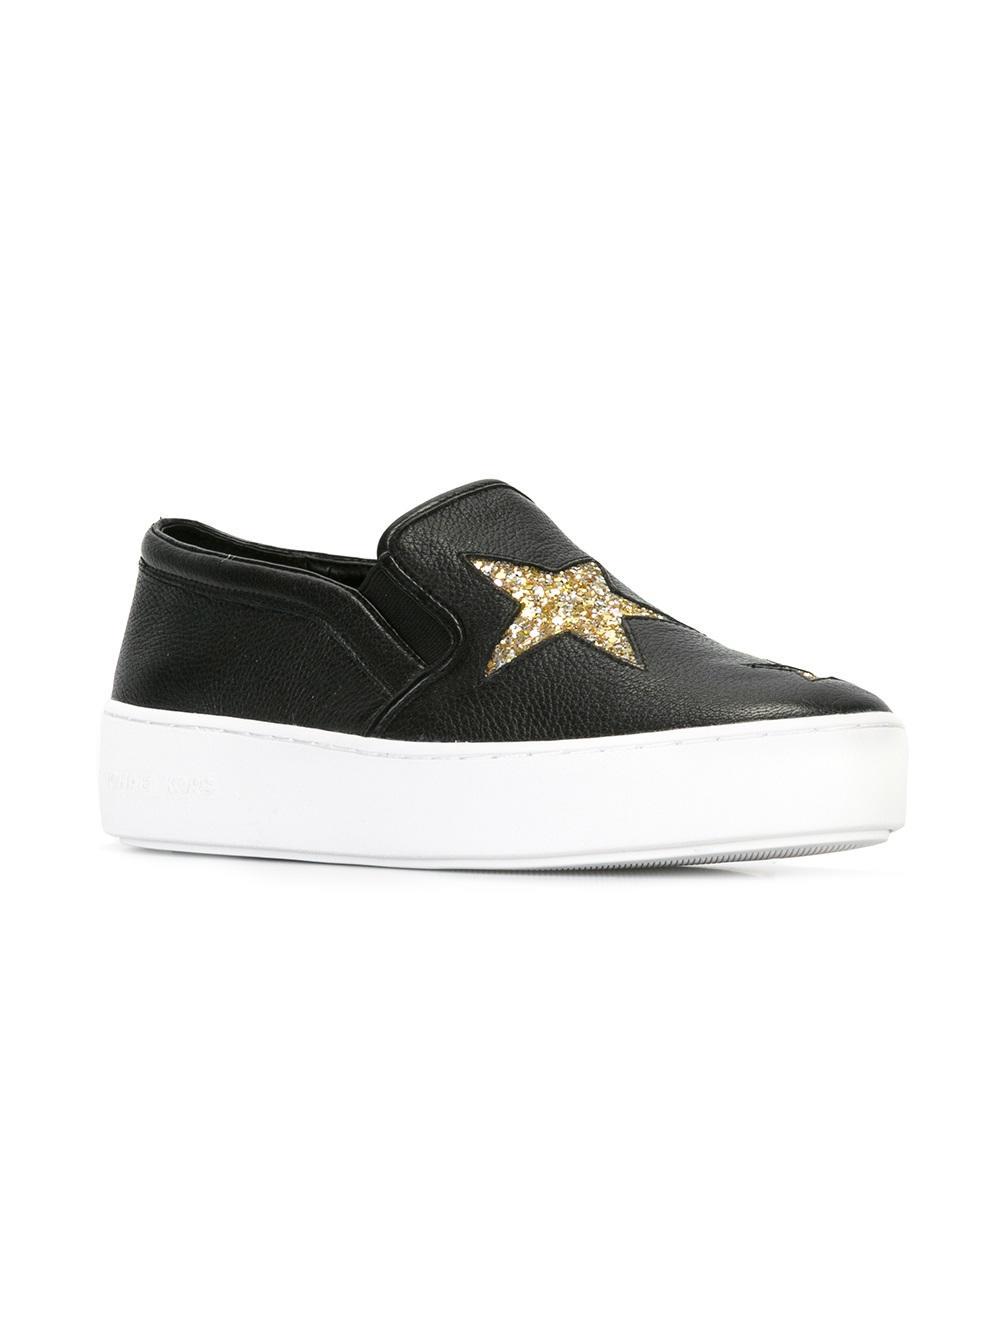 MICHAEL Michael Kors Leather Pia Slip-on Star Sneakers in Black | Lyst